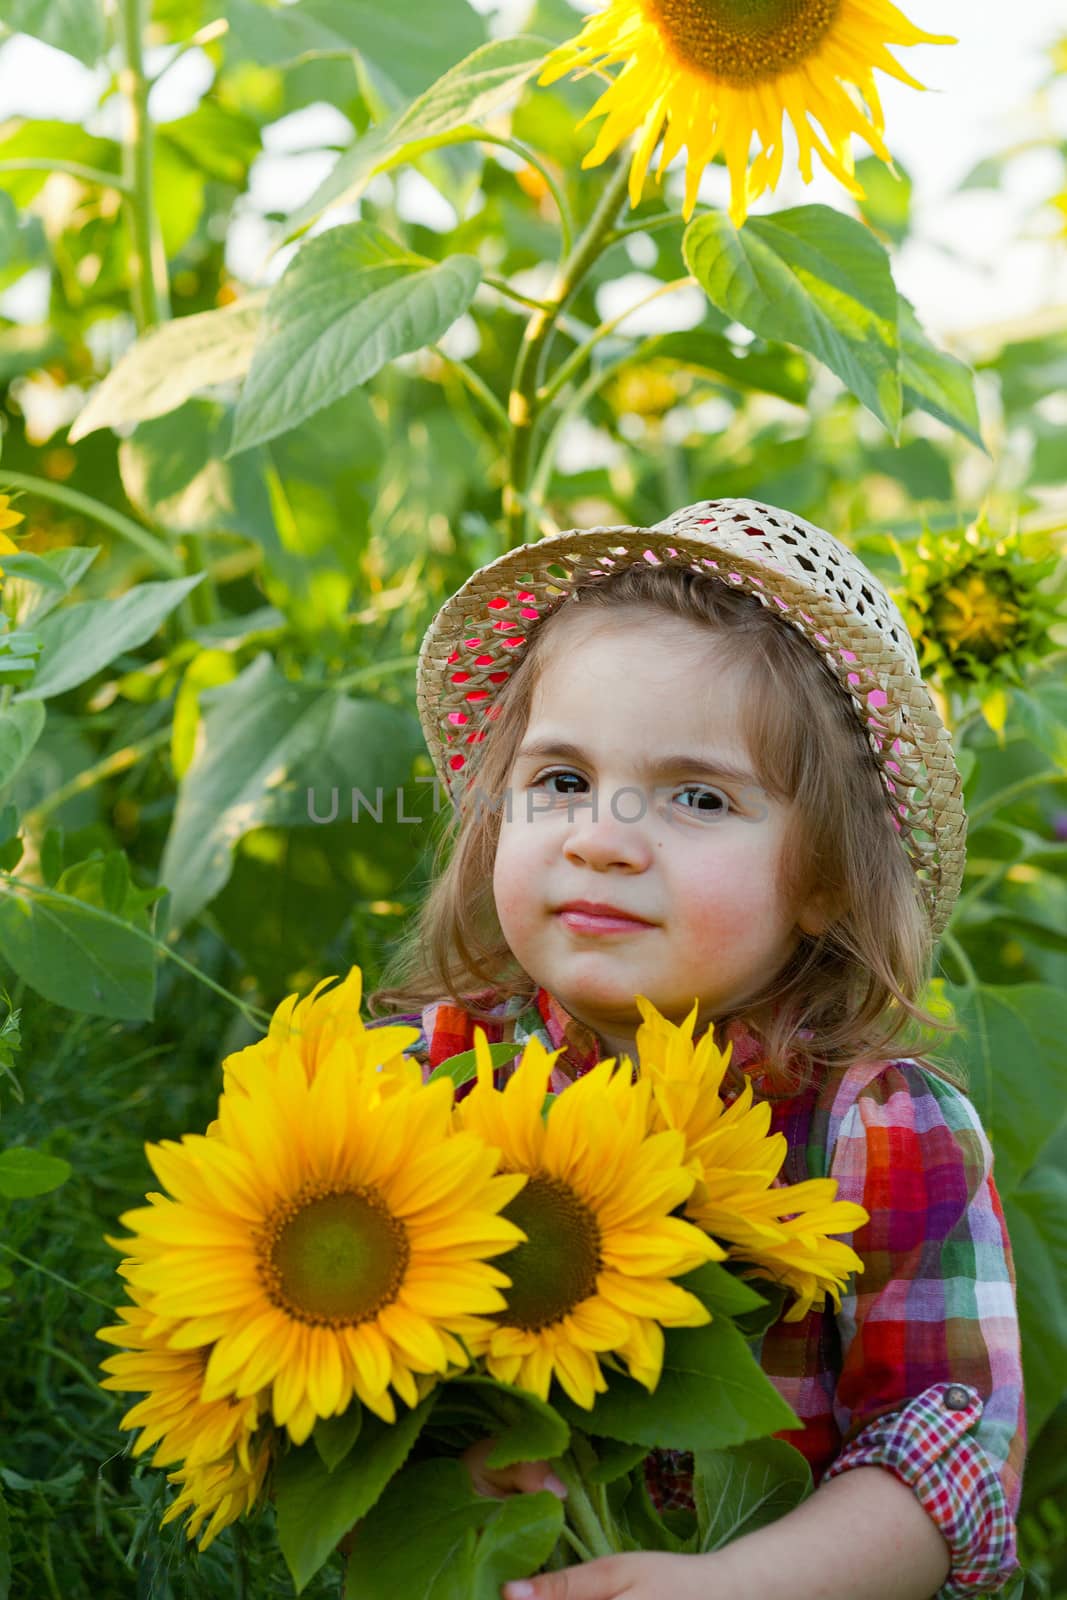 Little girl in a summer hat among sunflowers by elena_shchipkova